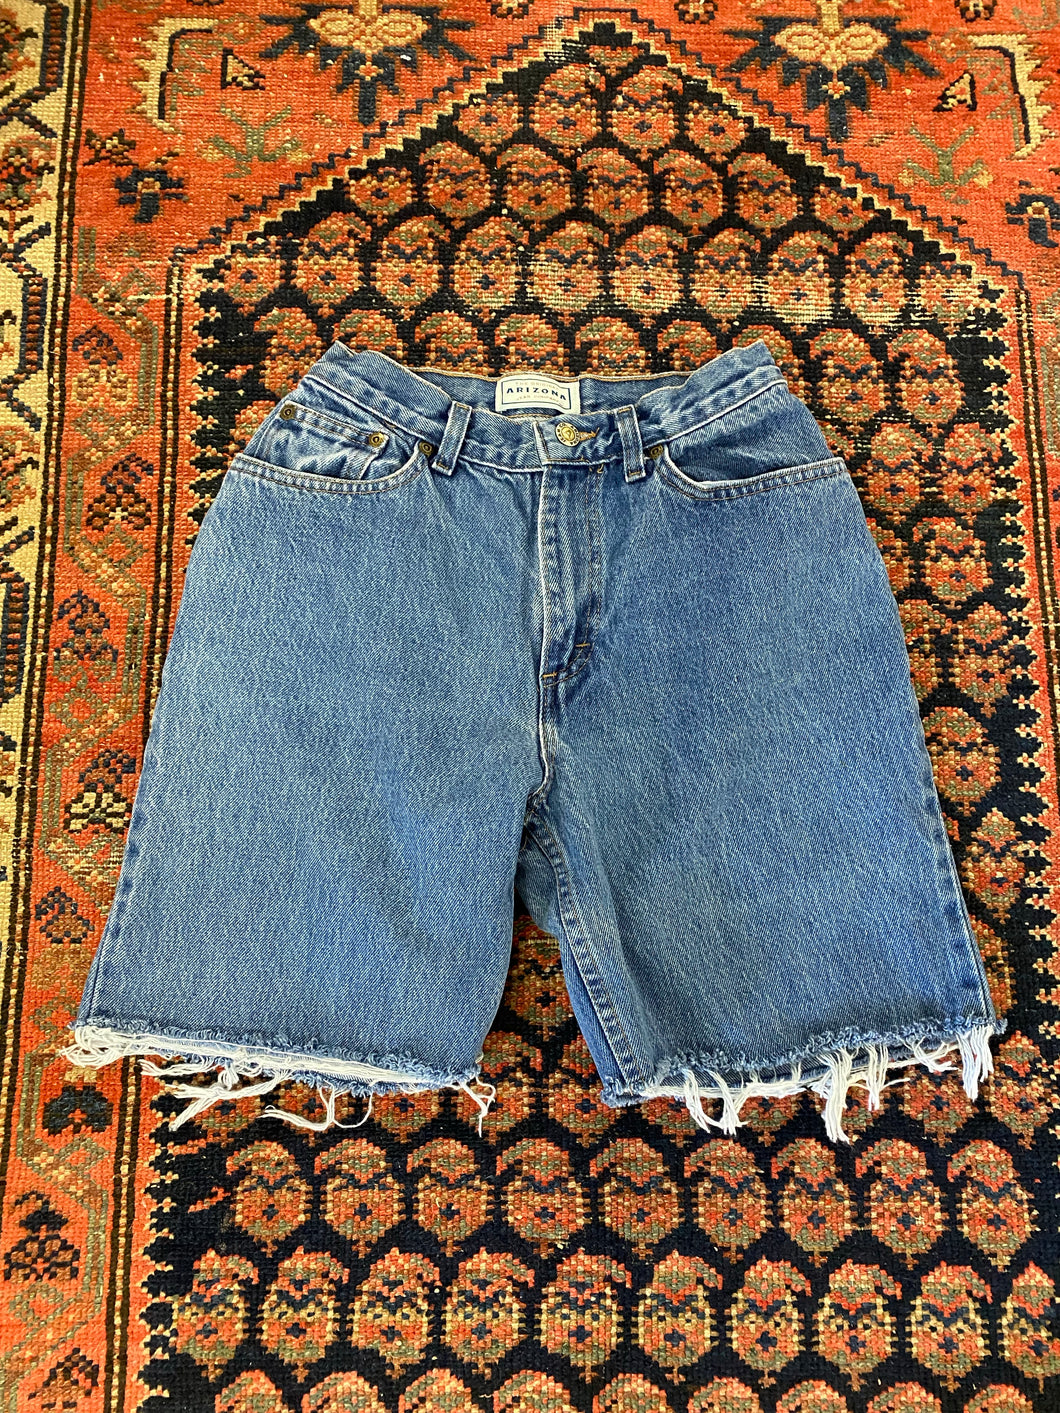 90s High Waisted Frayed Arizona Denim Shorts - 25in